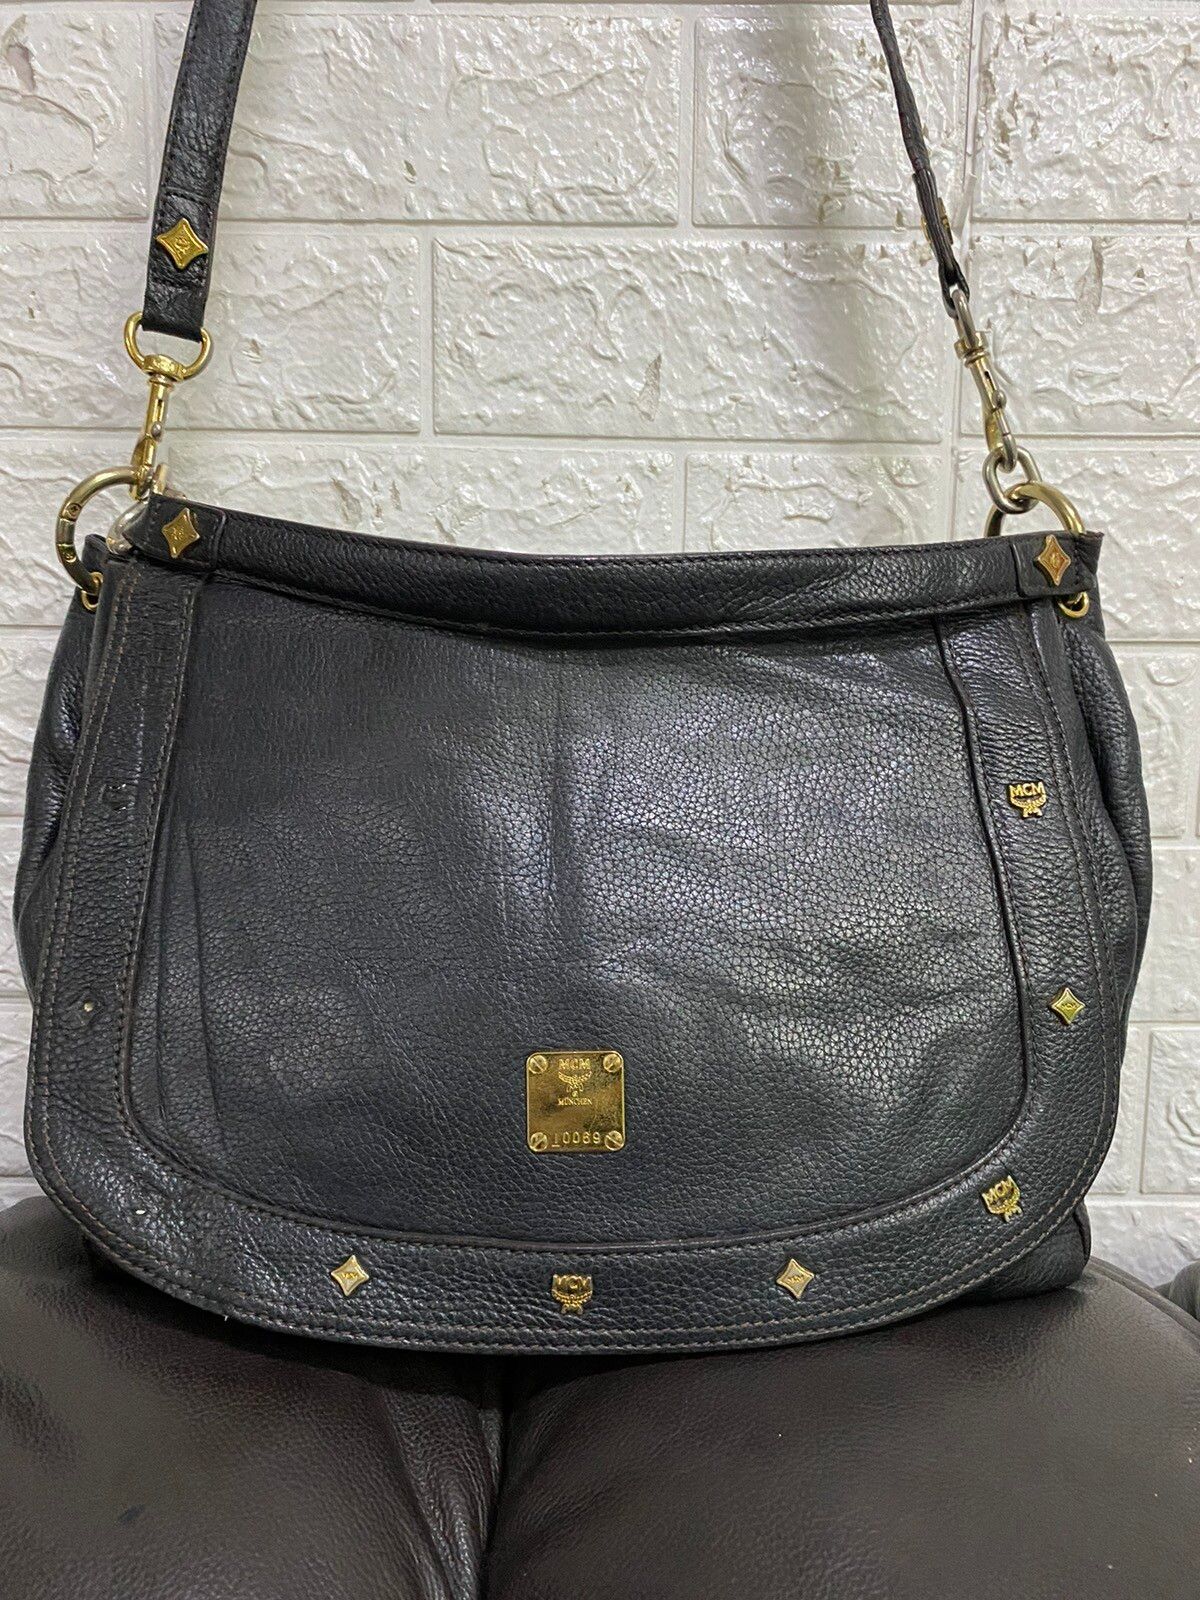 Authentic MCM Leather Shoulder Bag - 2